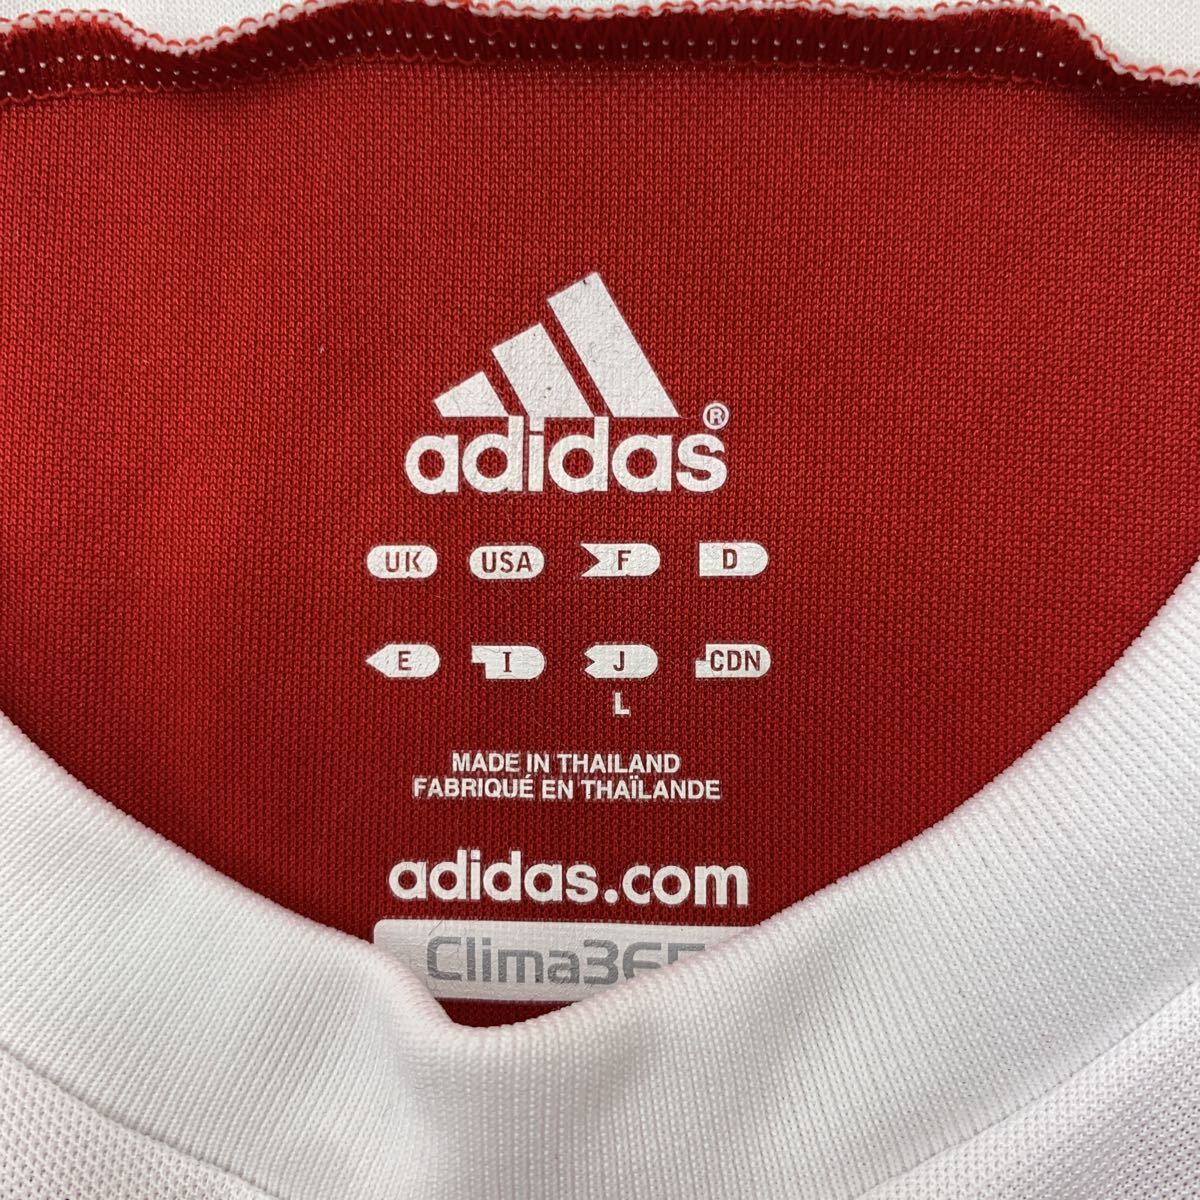  Adidas adidas игра рубашка pra рубашка рубашка с длинным рукавом L размер белый × красный футбол bare- Japan ka ramen z спорт #EA142